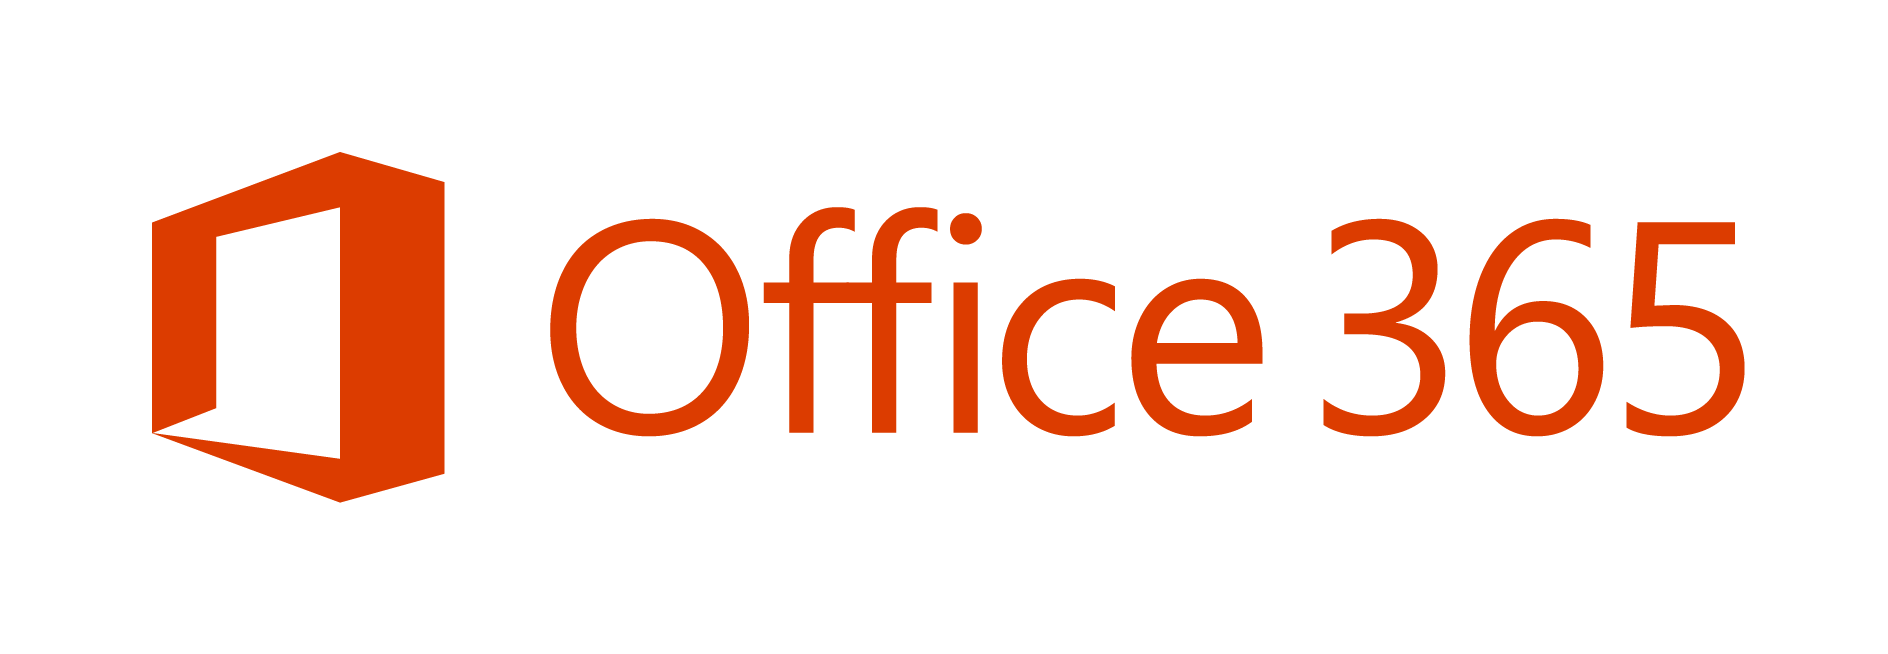 Office 365 Logotype